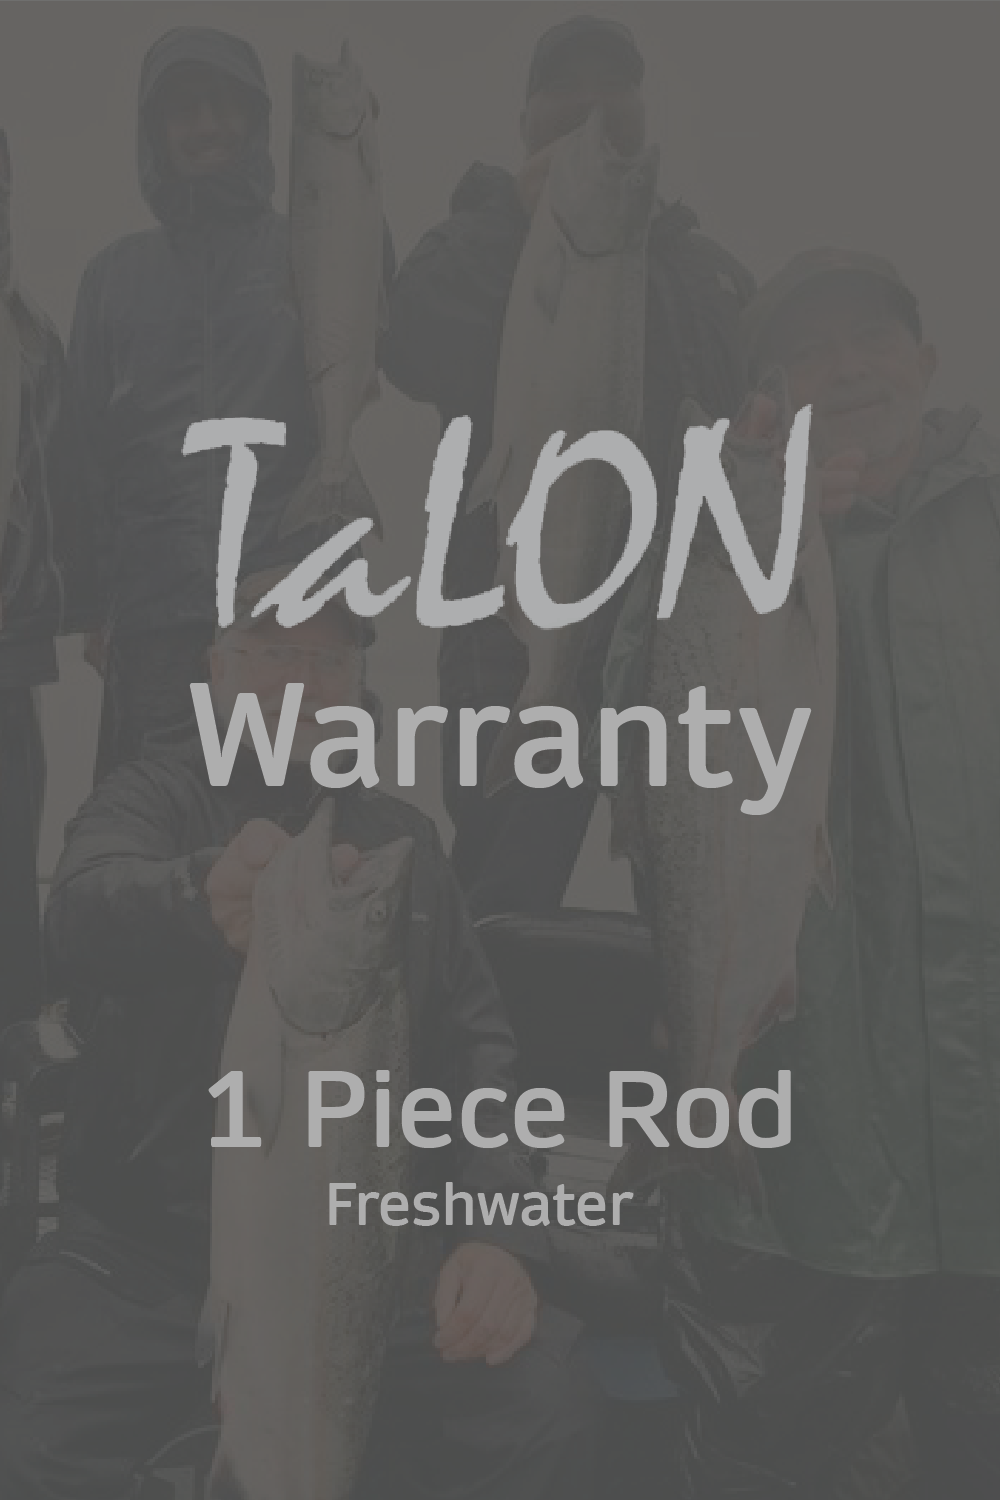 Warranty - 1 Piece Rods - Freshwater